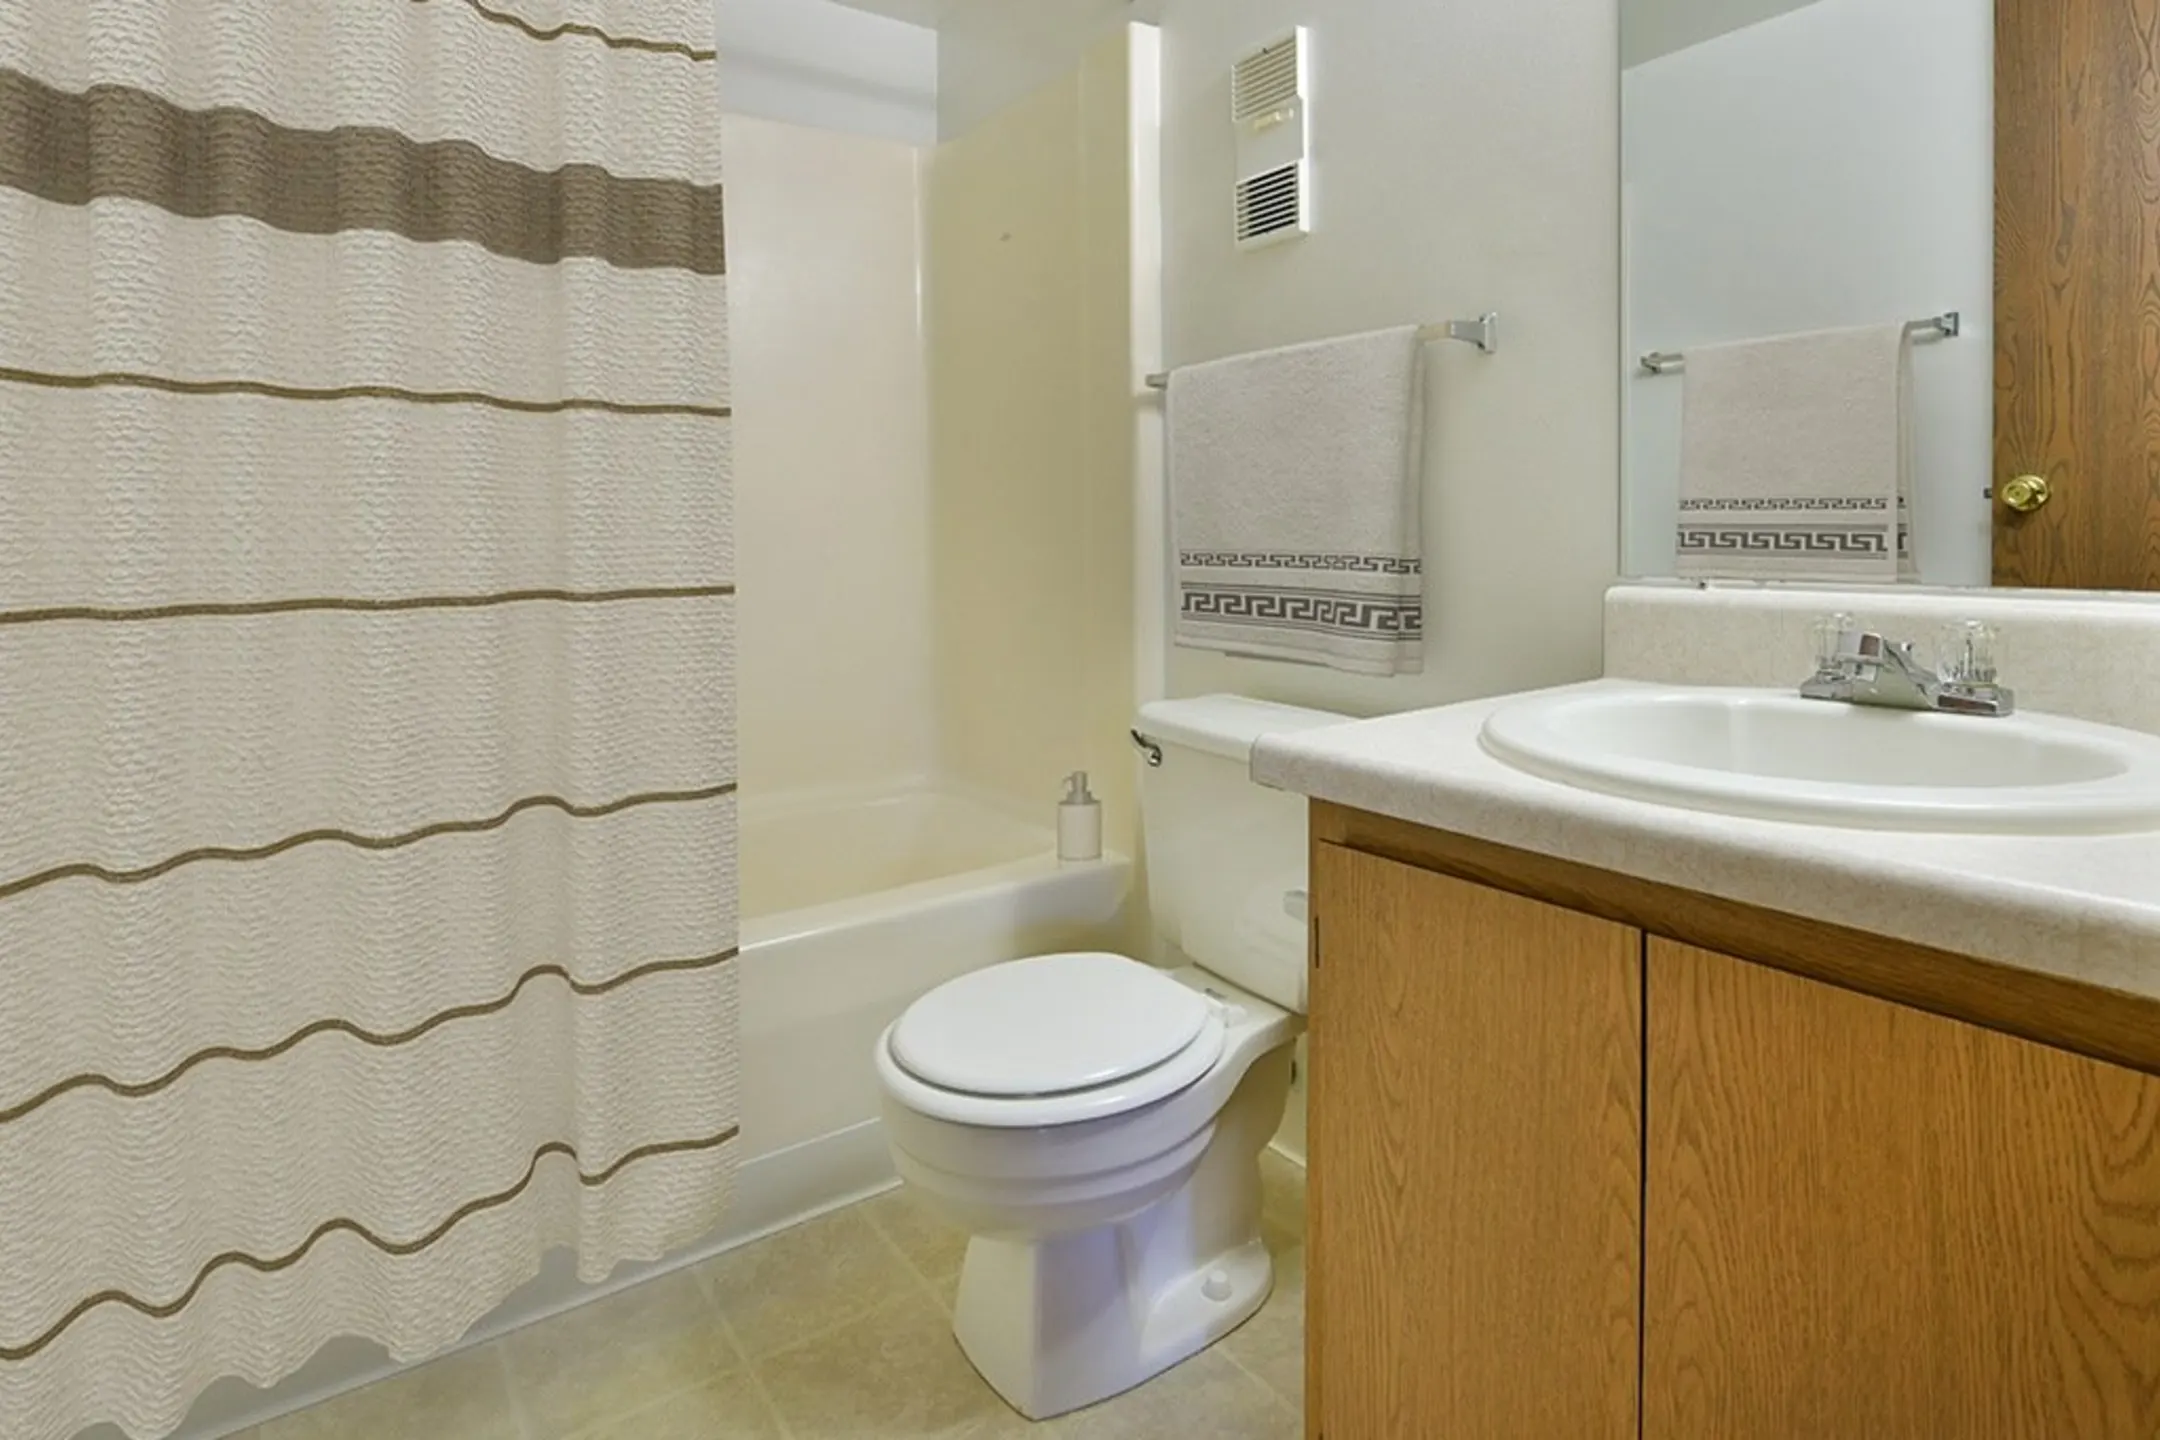 Bathroom - Charter Oaks Apartments - Davison, MI